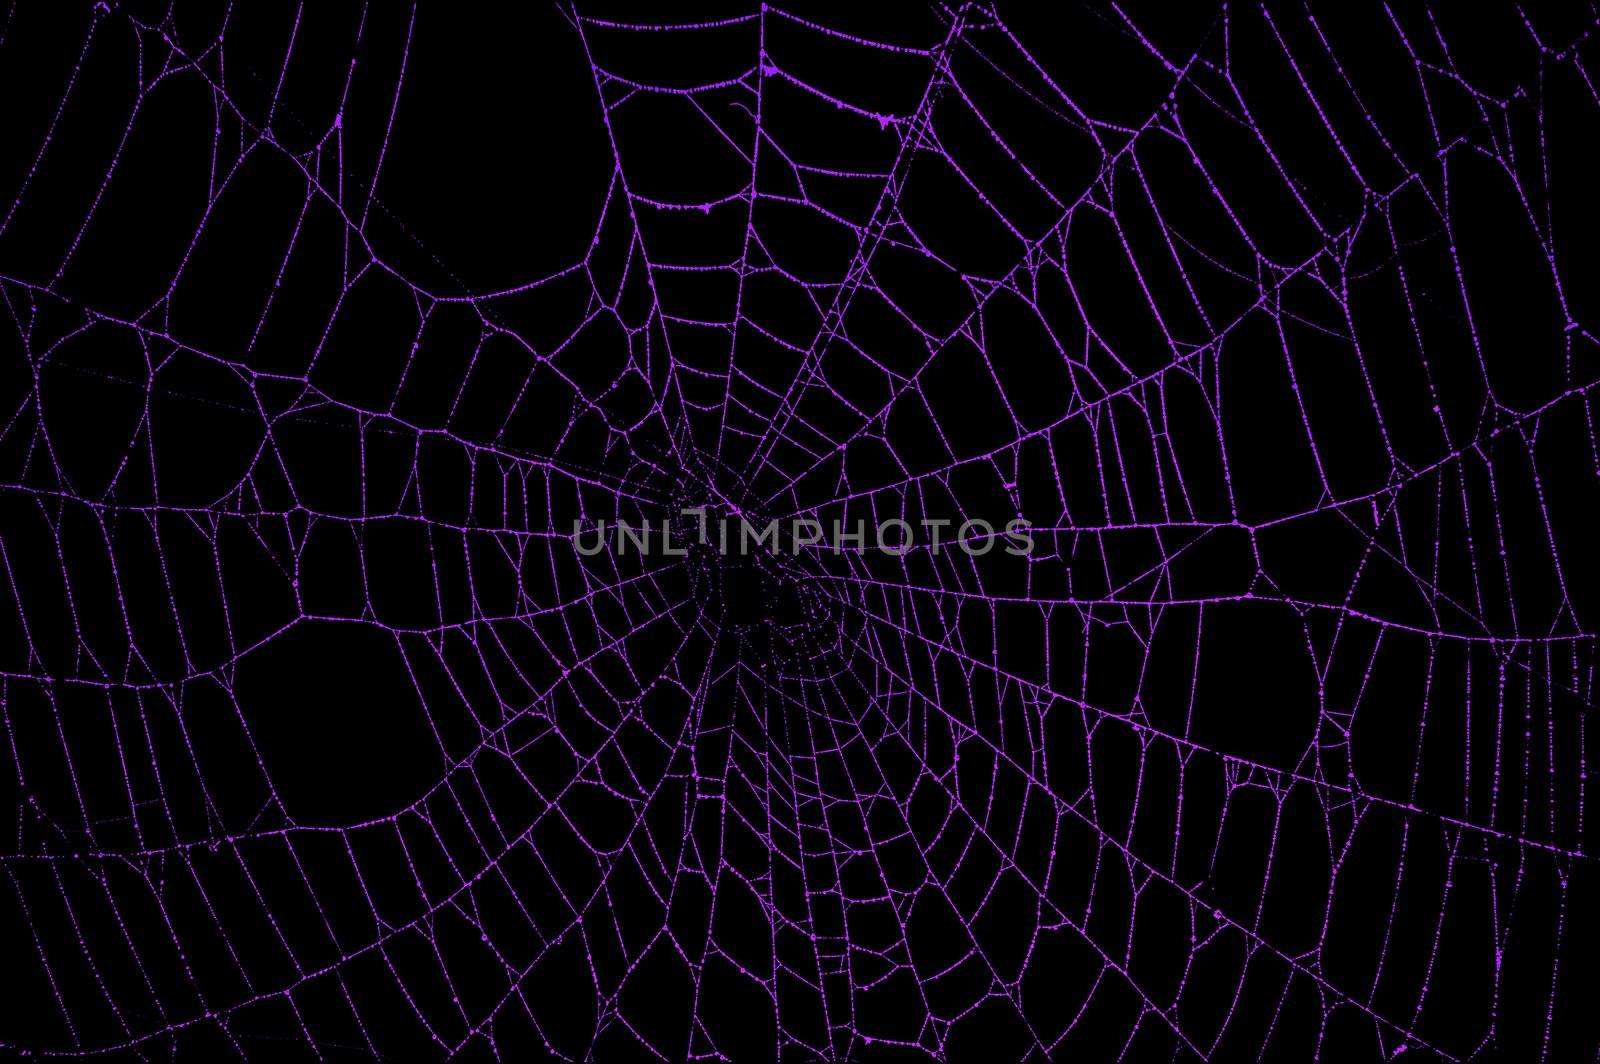 Purple spider web against a black background